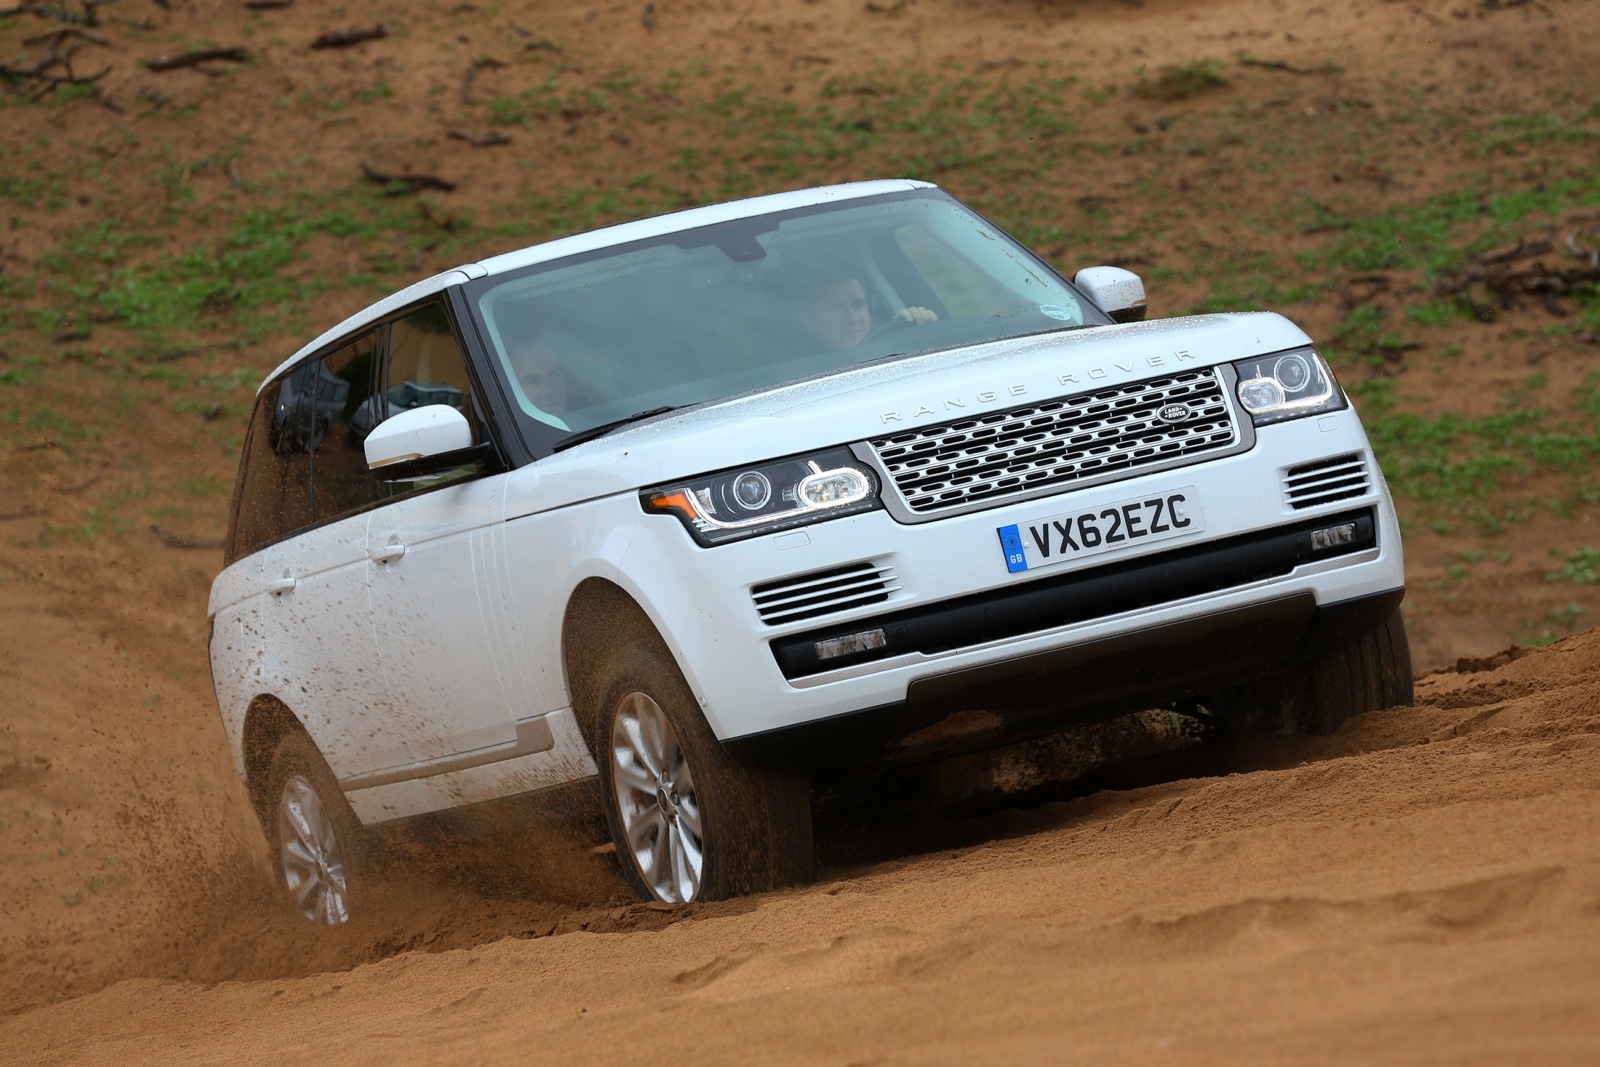 Voldoen hemel Atlantische Oceaan 2013 Land Rover Range Rover Review, Ratings, Specs, Prices, and Photos -  The Car Connection